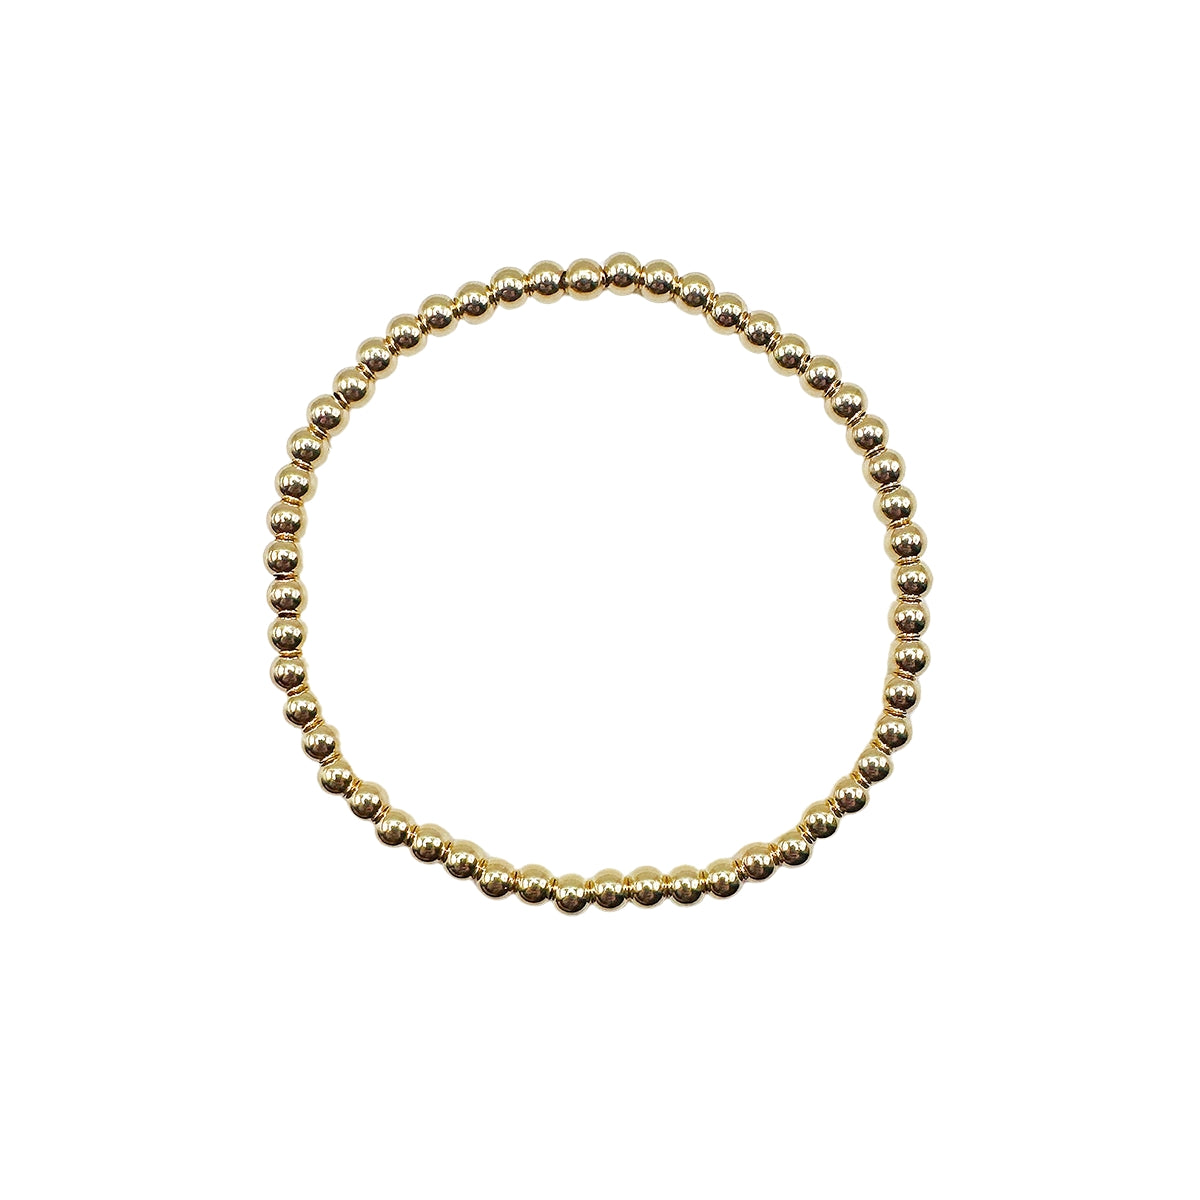 Featherly 14k gold filled 4mm stretch beaded bracelet